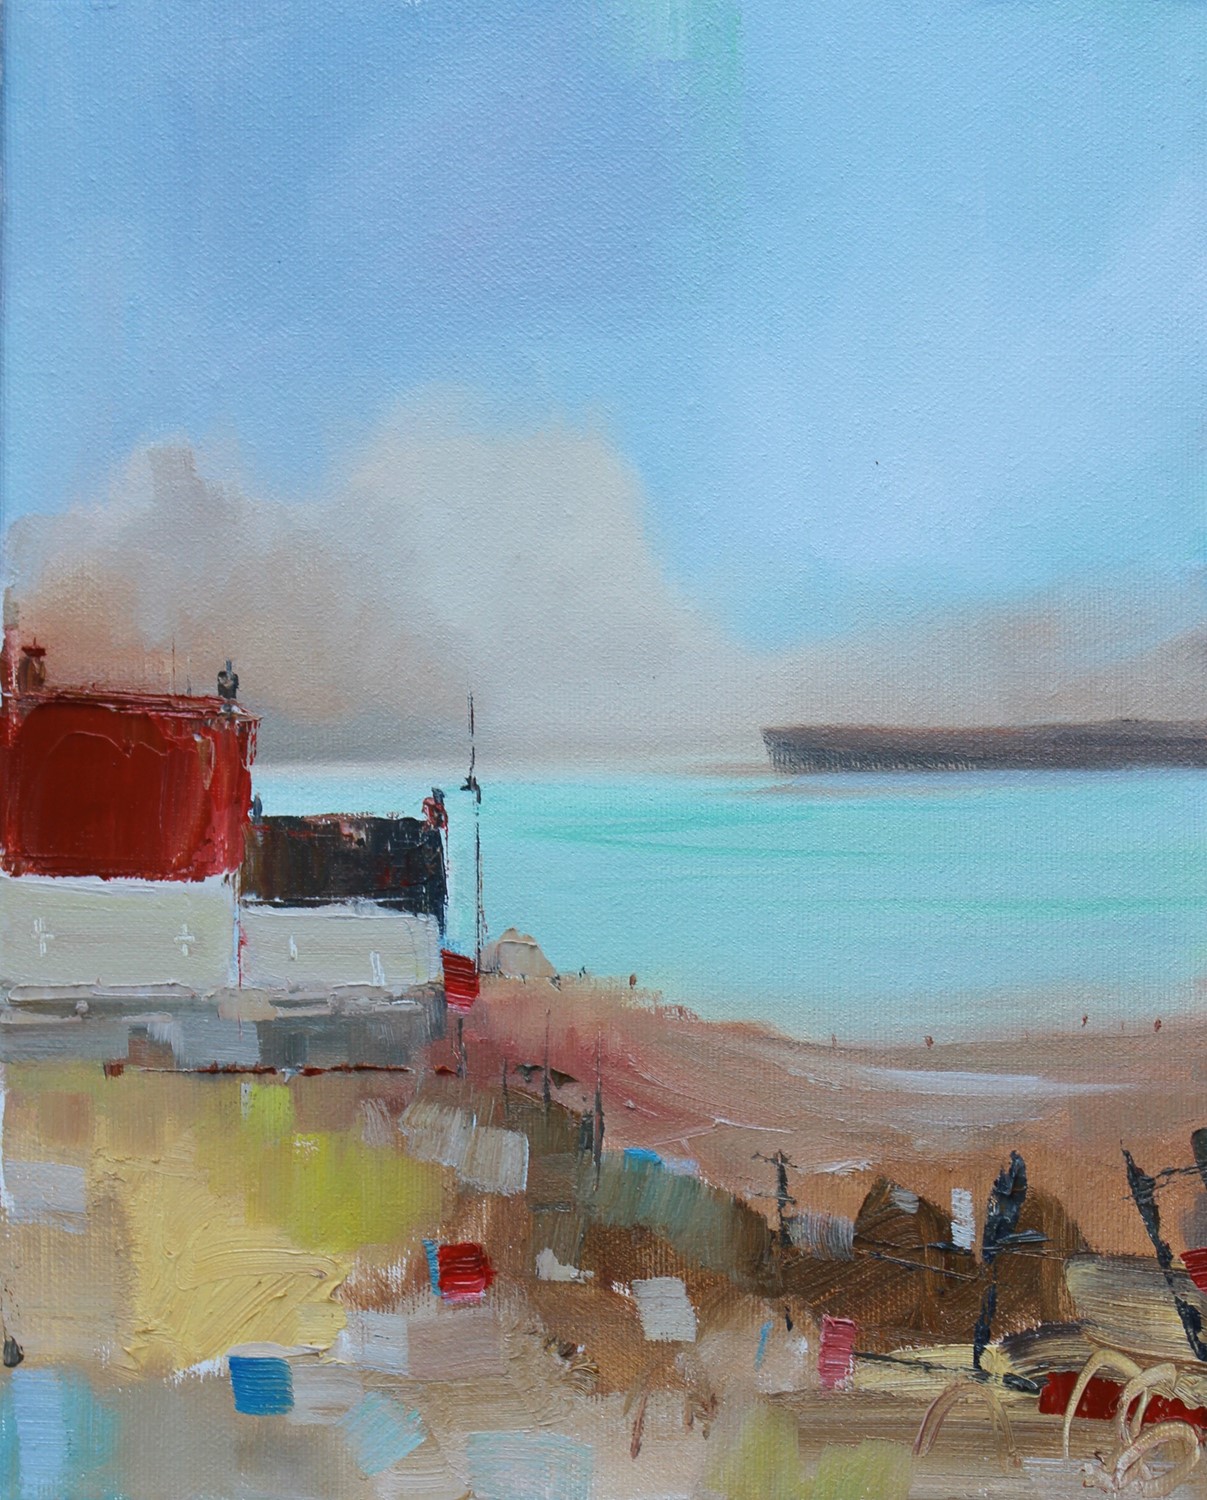 'Croft on the Coast' by artist Rosanne Barr